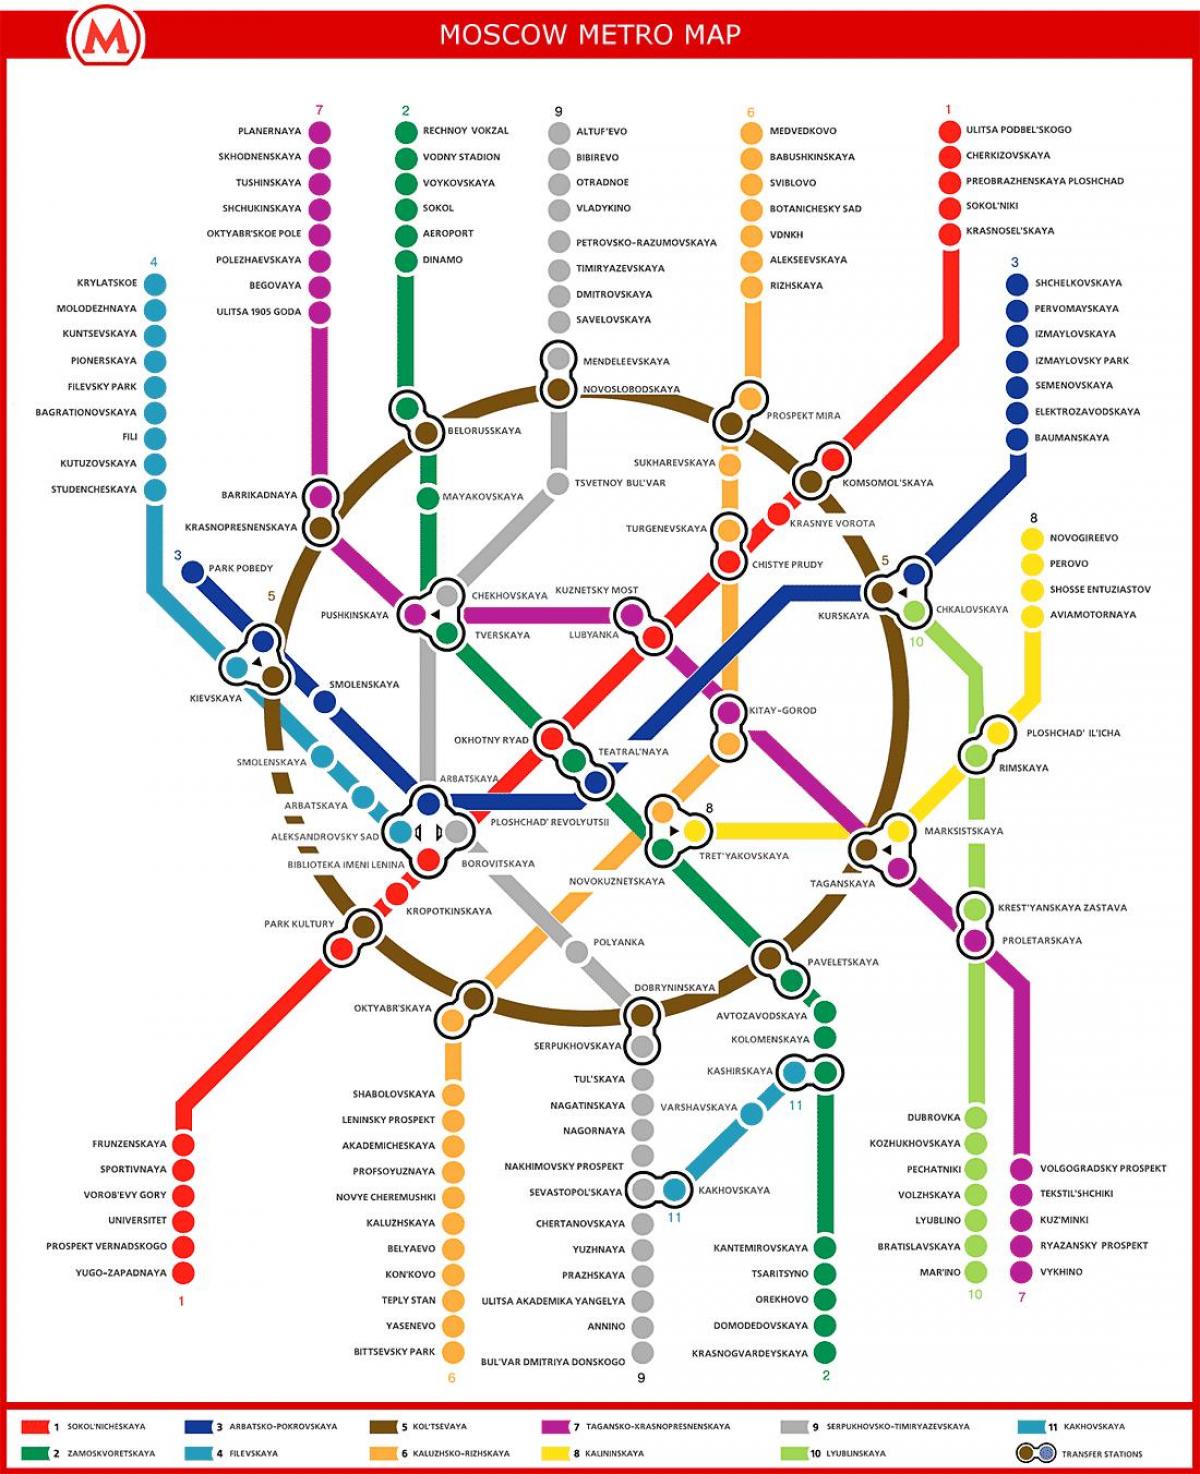 Moskou metro kat jeyografik nan ris